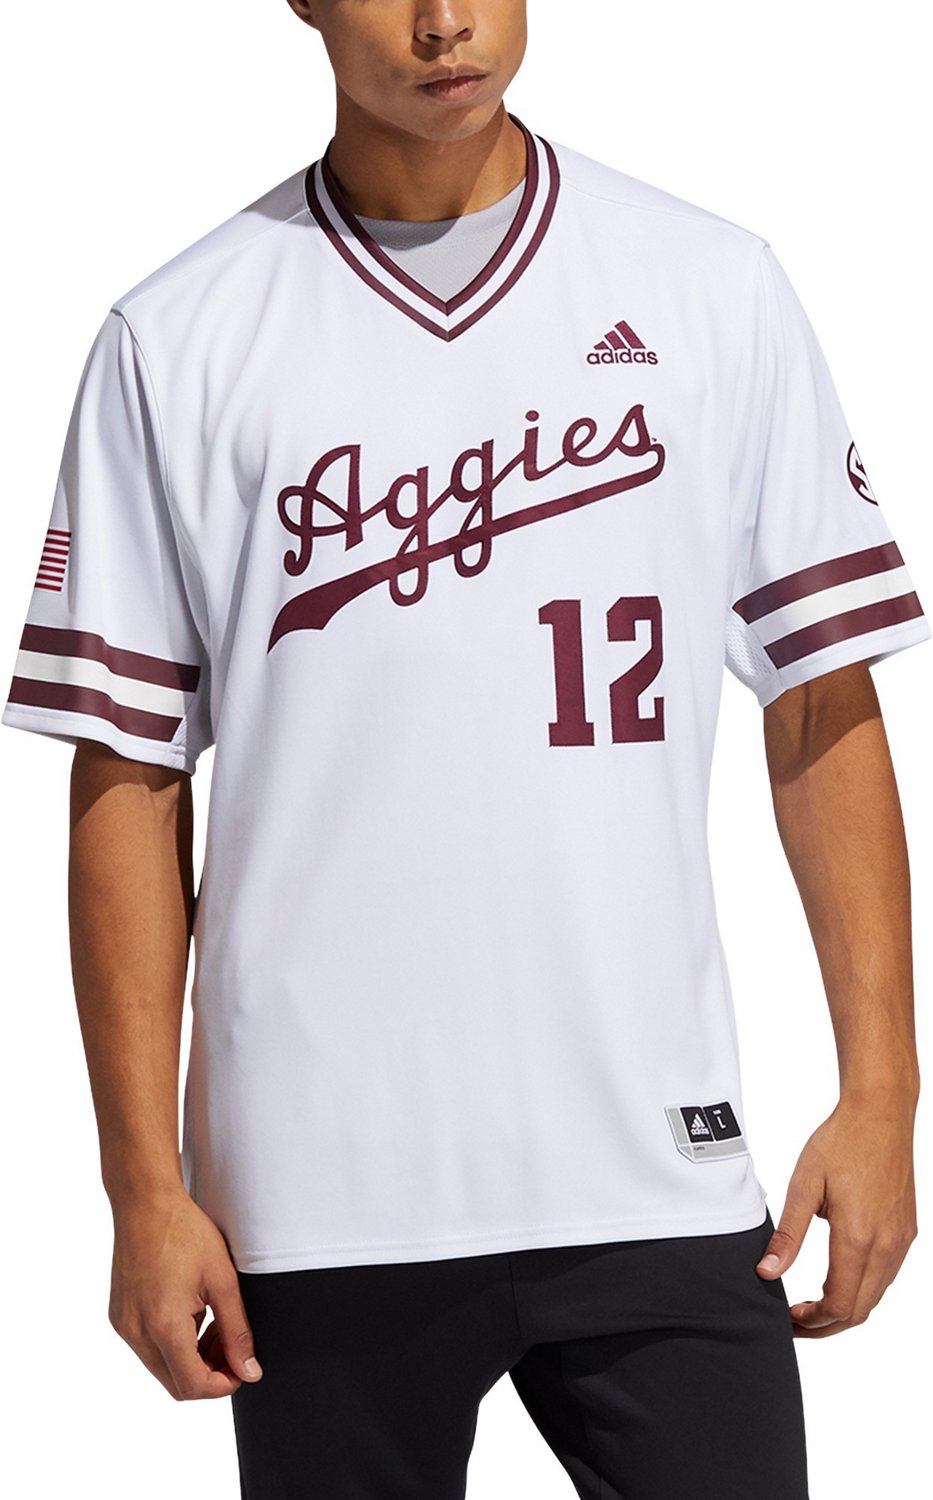 Texas A&M Baseball New Uniforms — UNISWAG